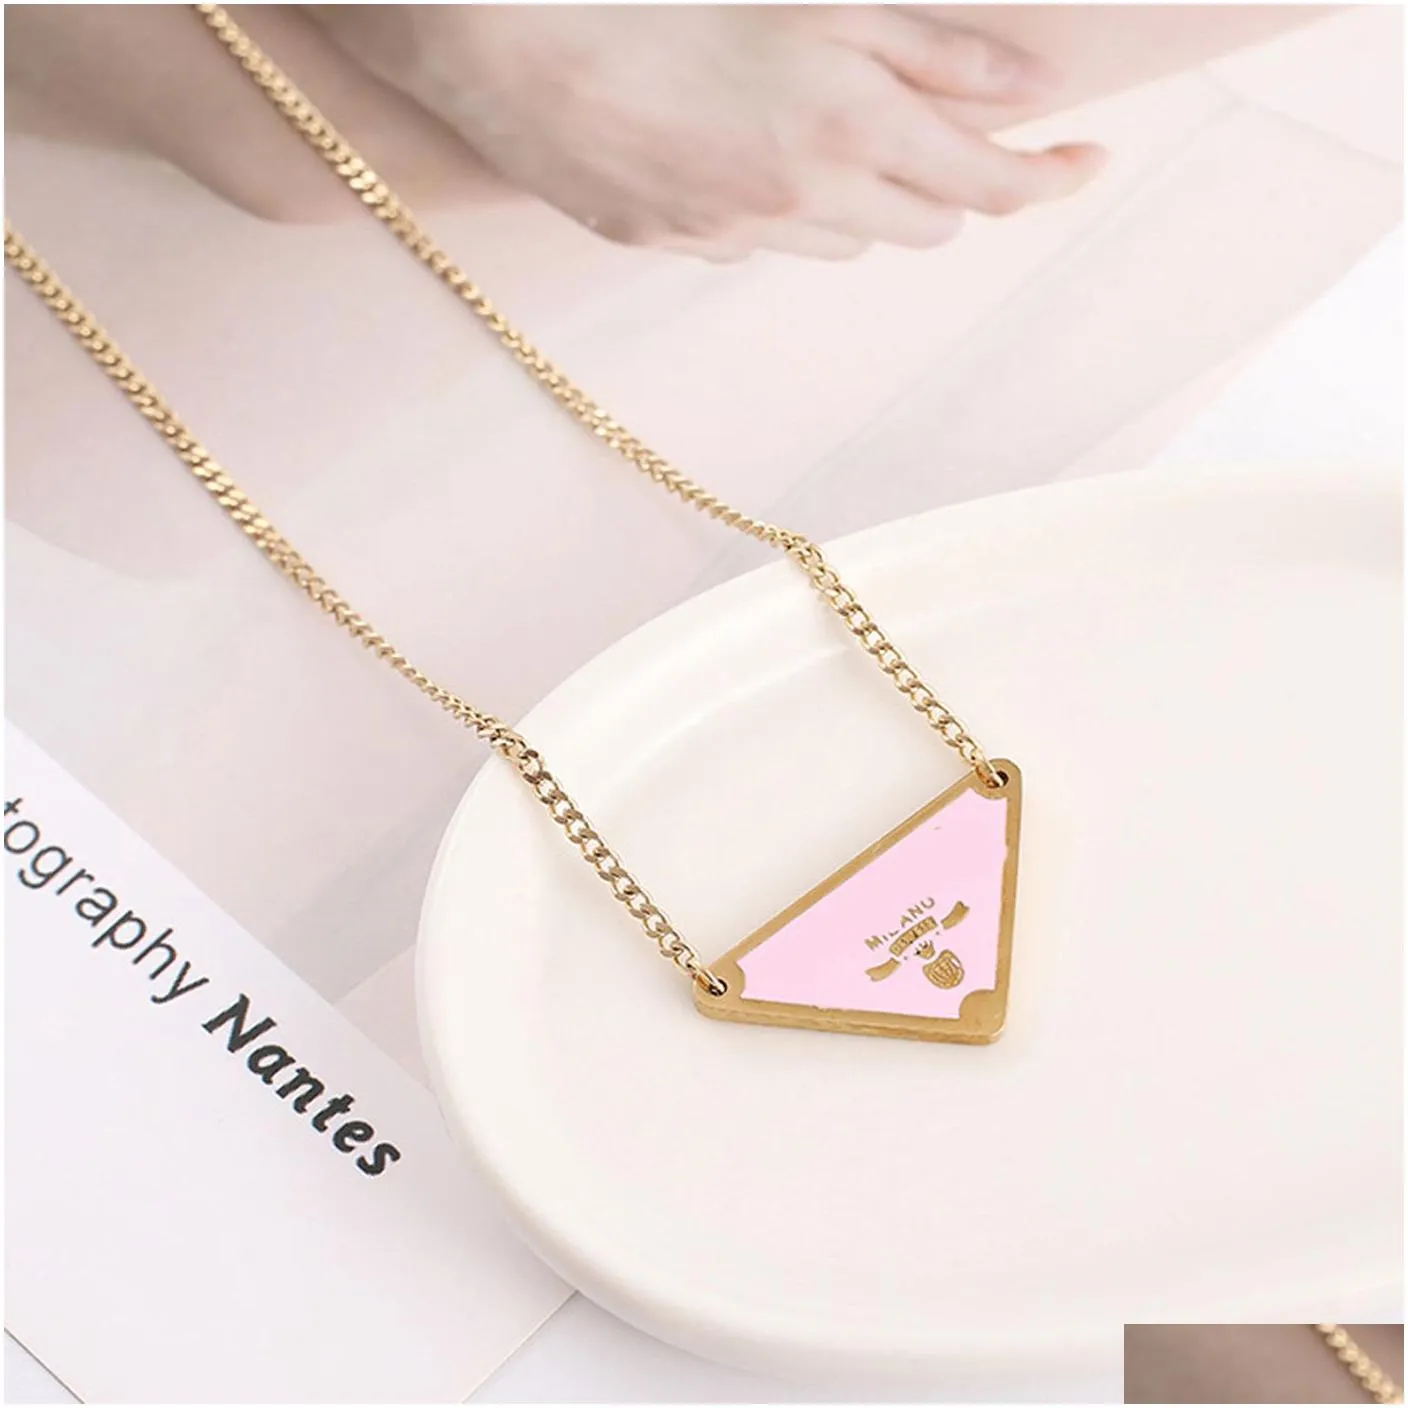 Gold necklaces Black White pink Triangle Letter Pendant Necklace Luxury Brand Designer Jewelry Titanium Steel pendants Chain Men Women Unisex